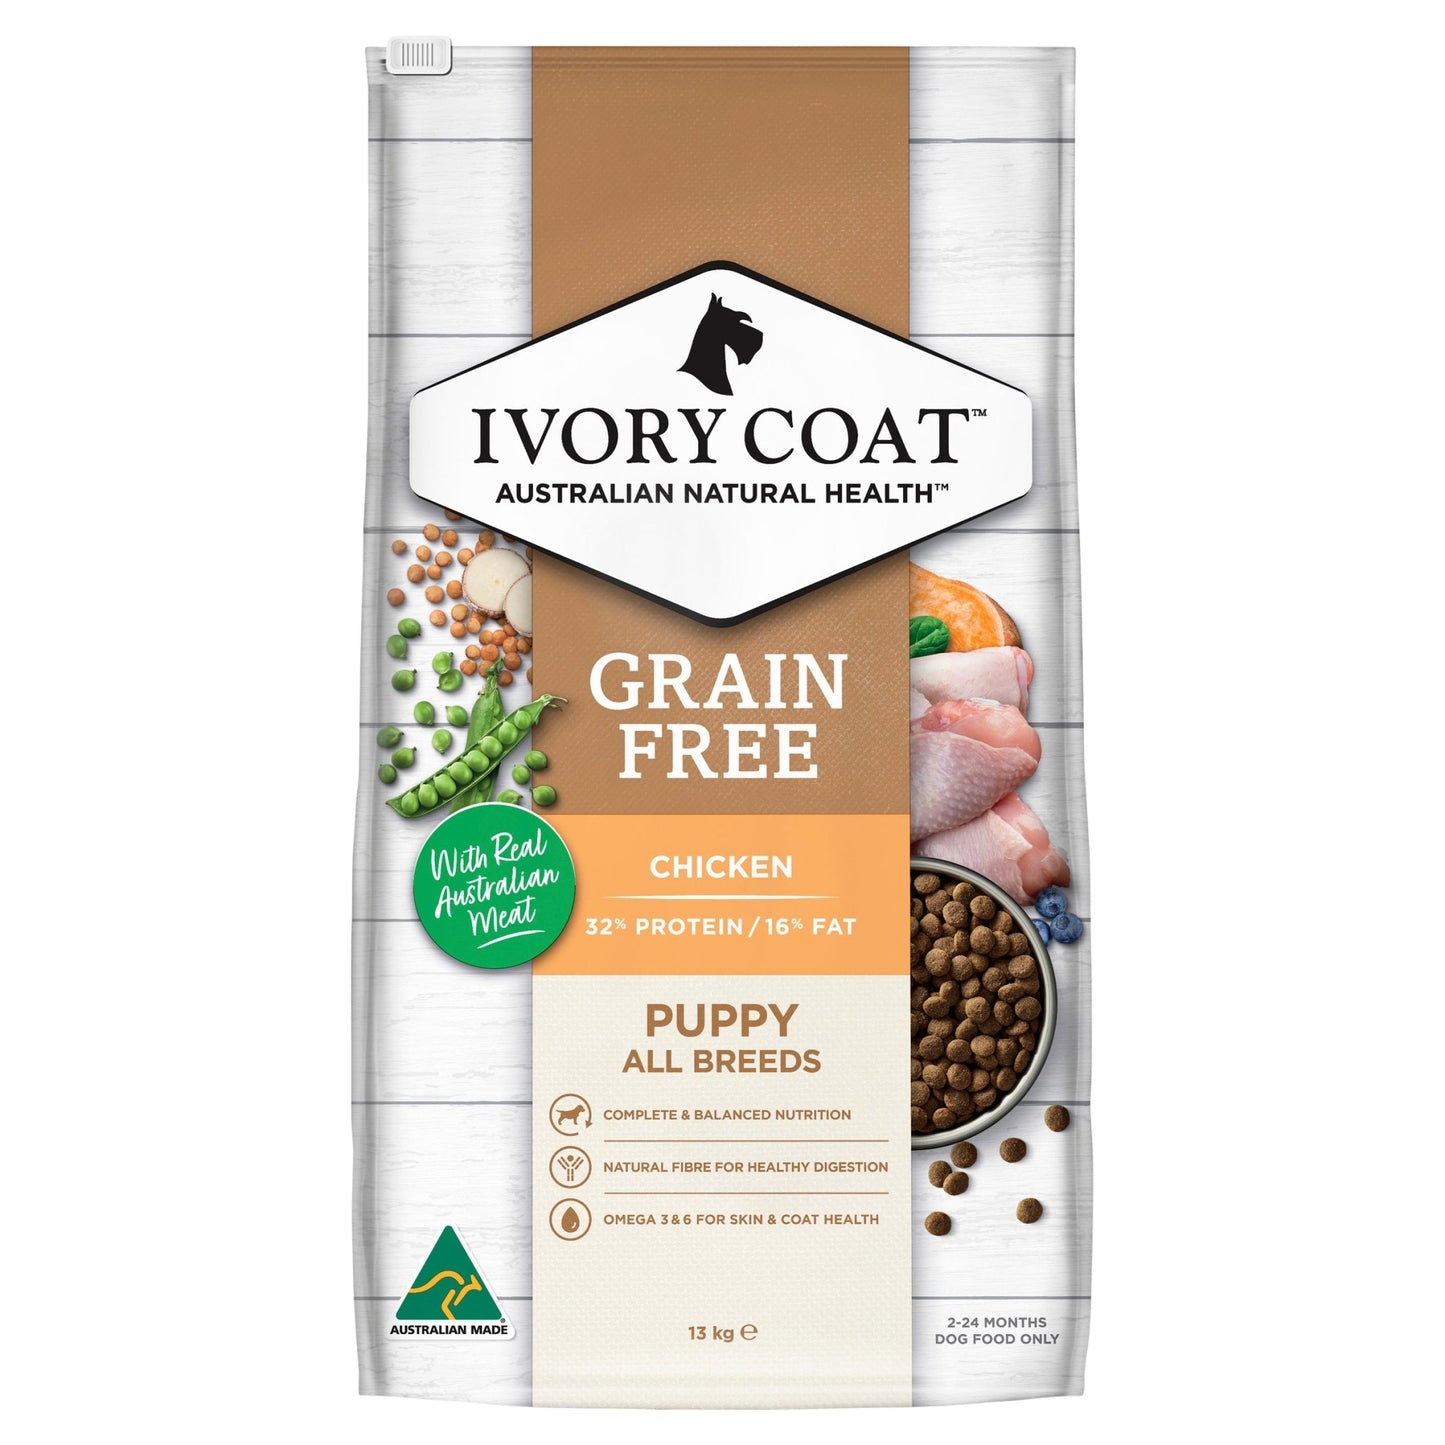 Ivory Coat Grain Free Dry Dog Food Puppy Chicken - Woonona Petfood & Produce